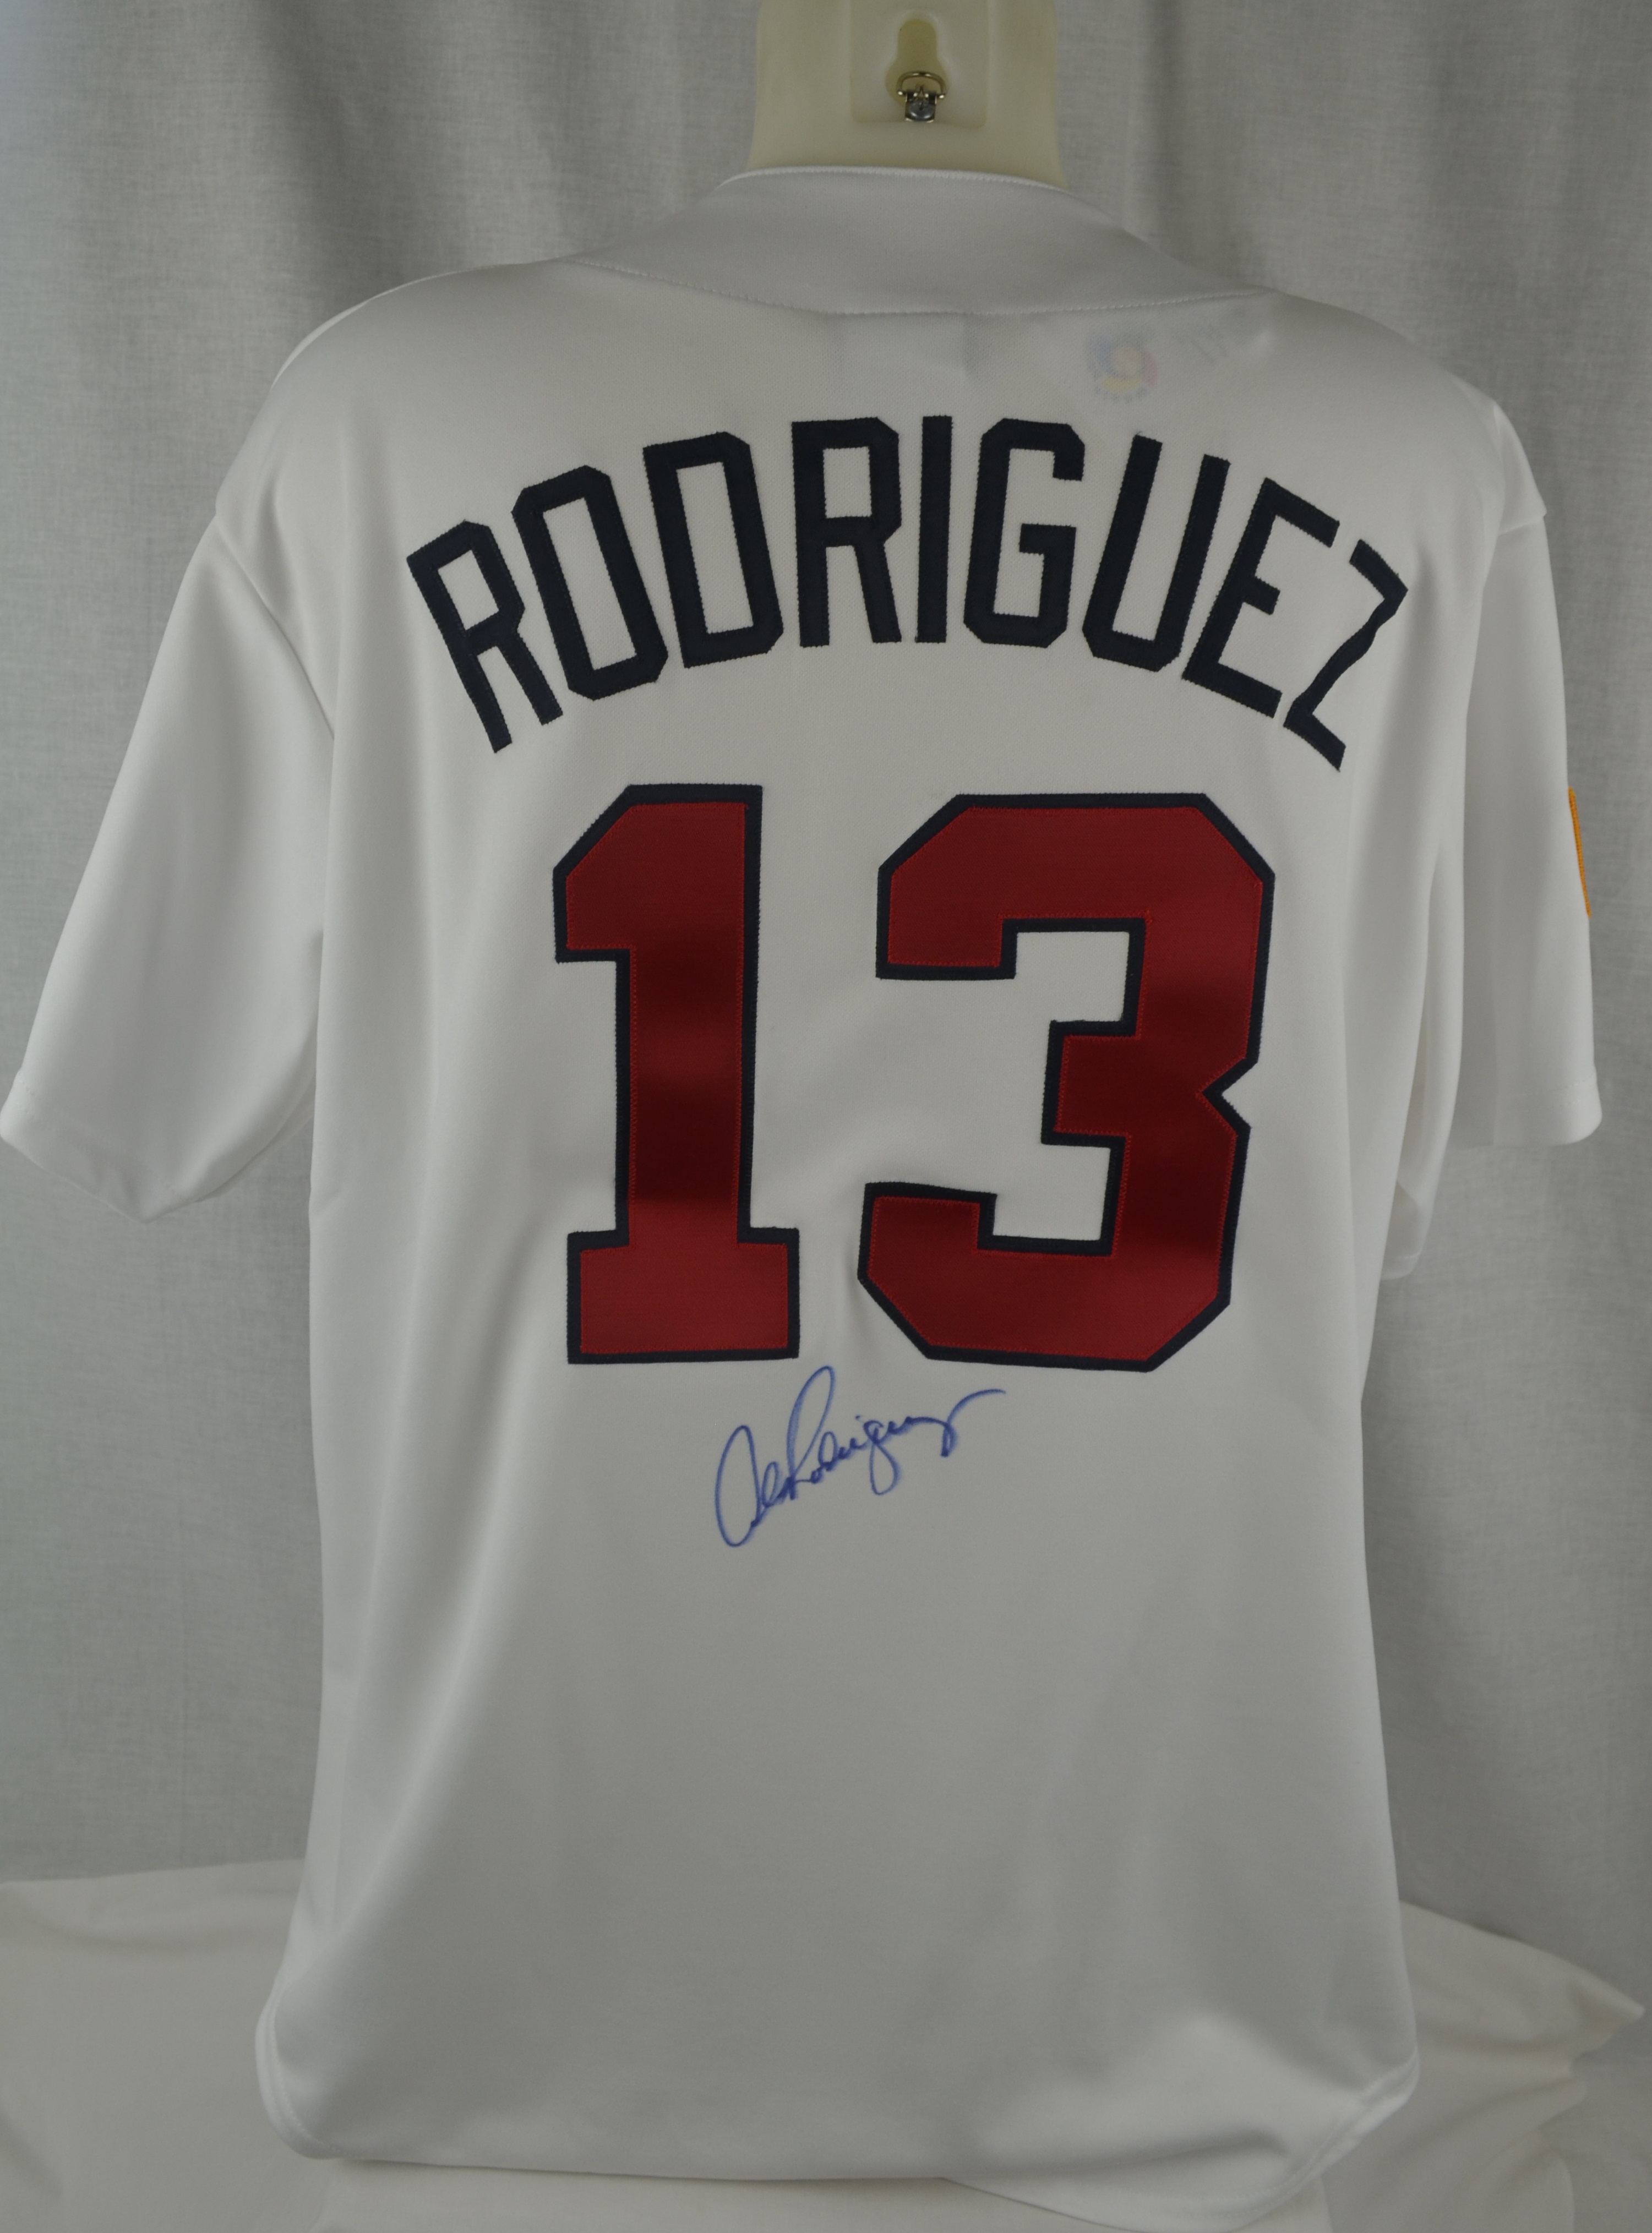 Alex Rodriguez Signed 06' World Baseball Classic Jersey. Limited